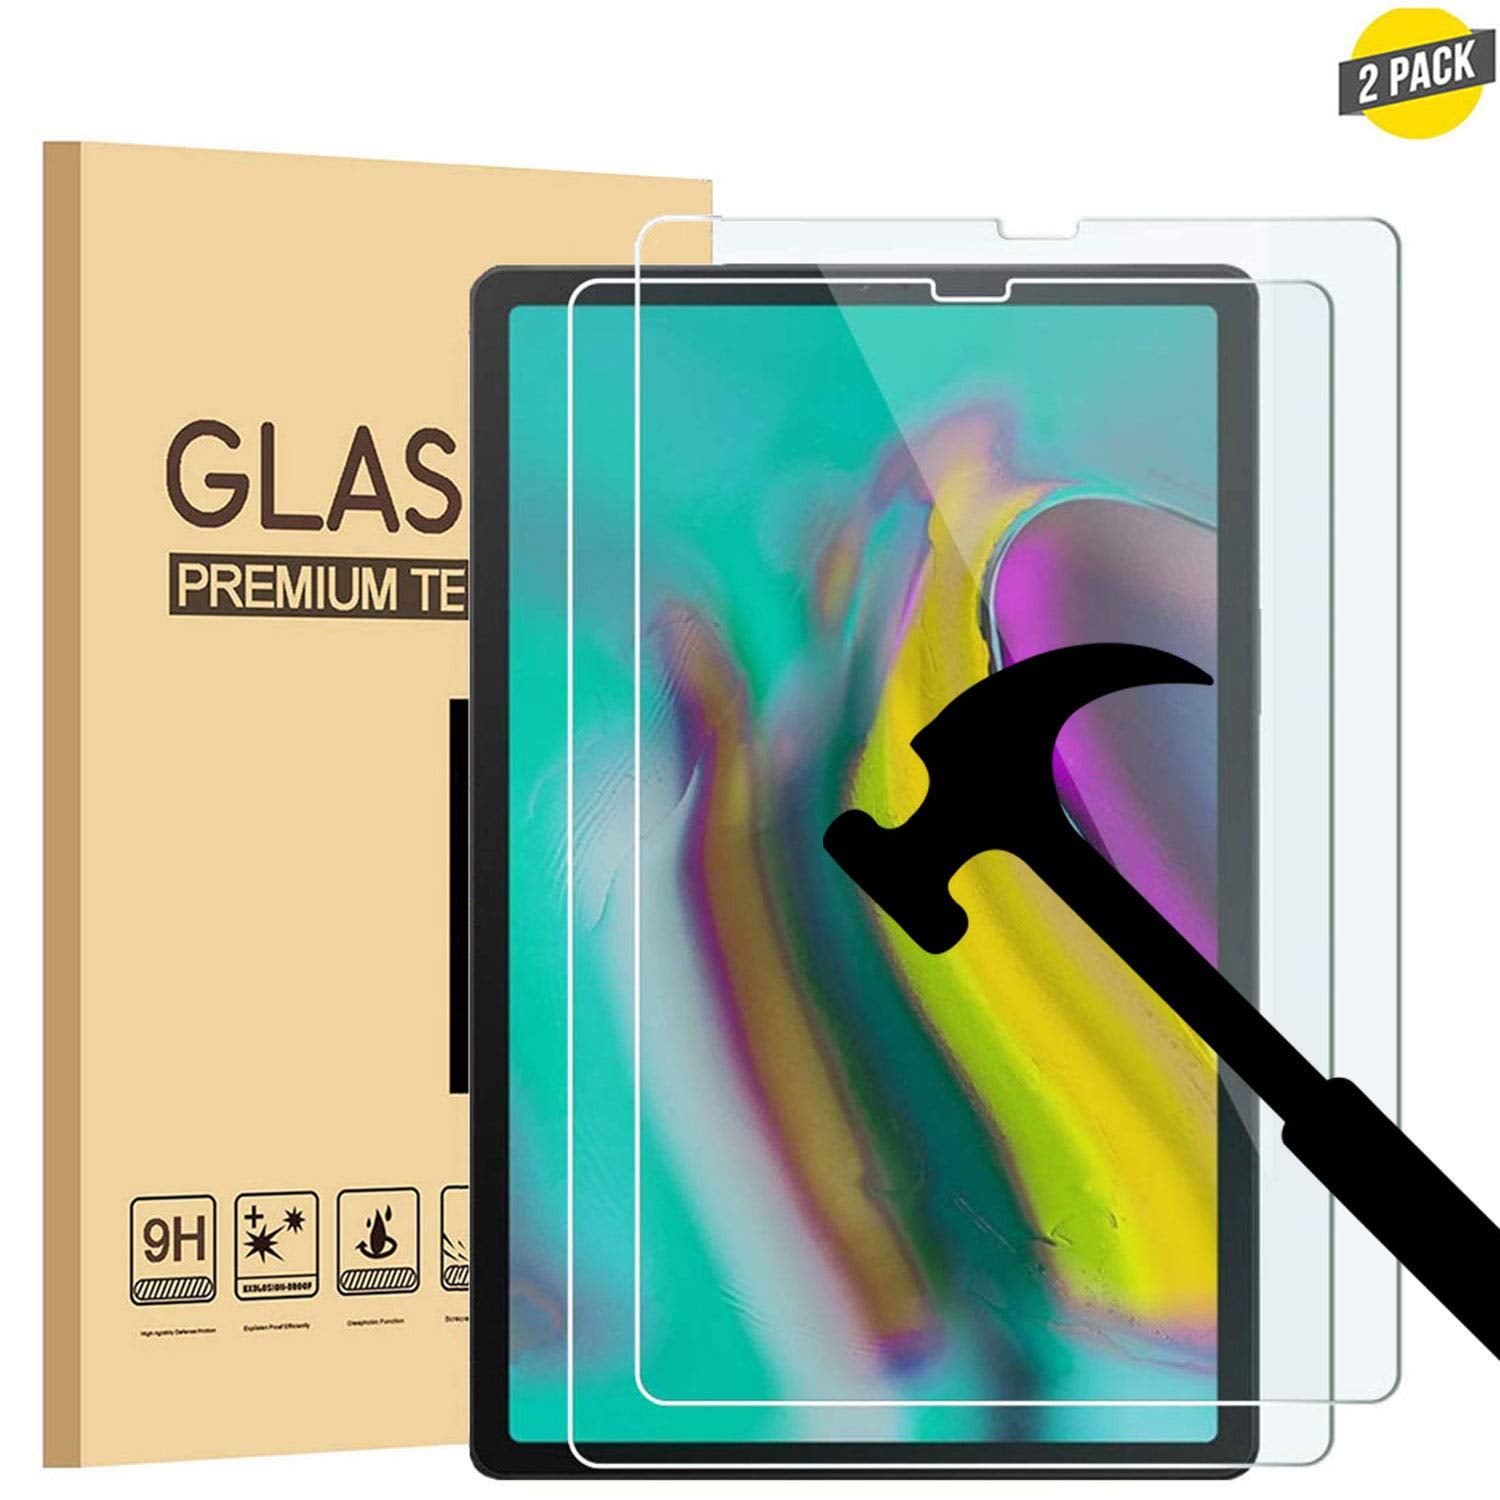 3 x gard® Premium  Screen Protectors for Tablet Samsung Galaxy Tab S5e 10.5 Inch 